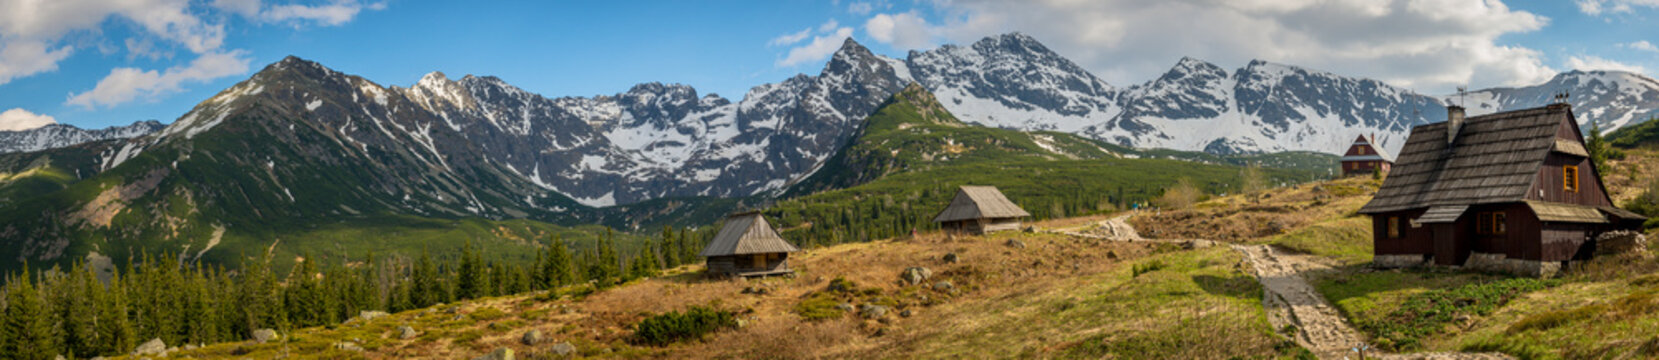 Fototapeta Hala Gasienicowa in Tatra Mountains - panorama